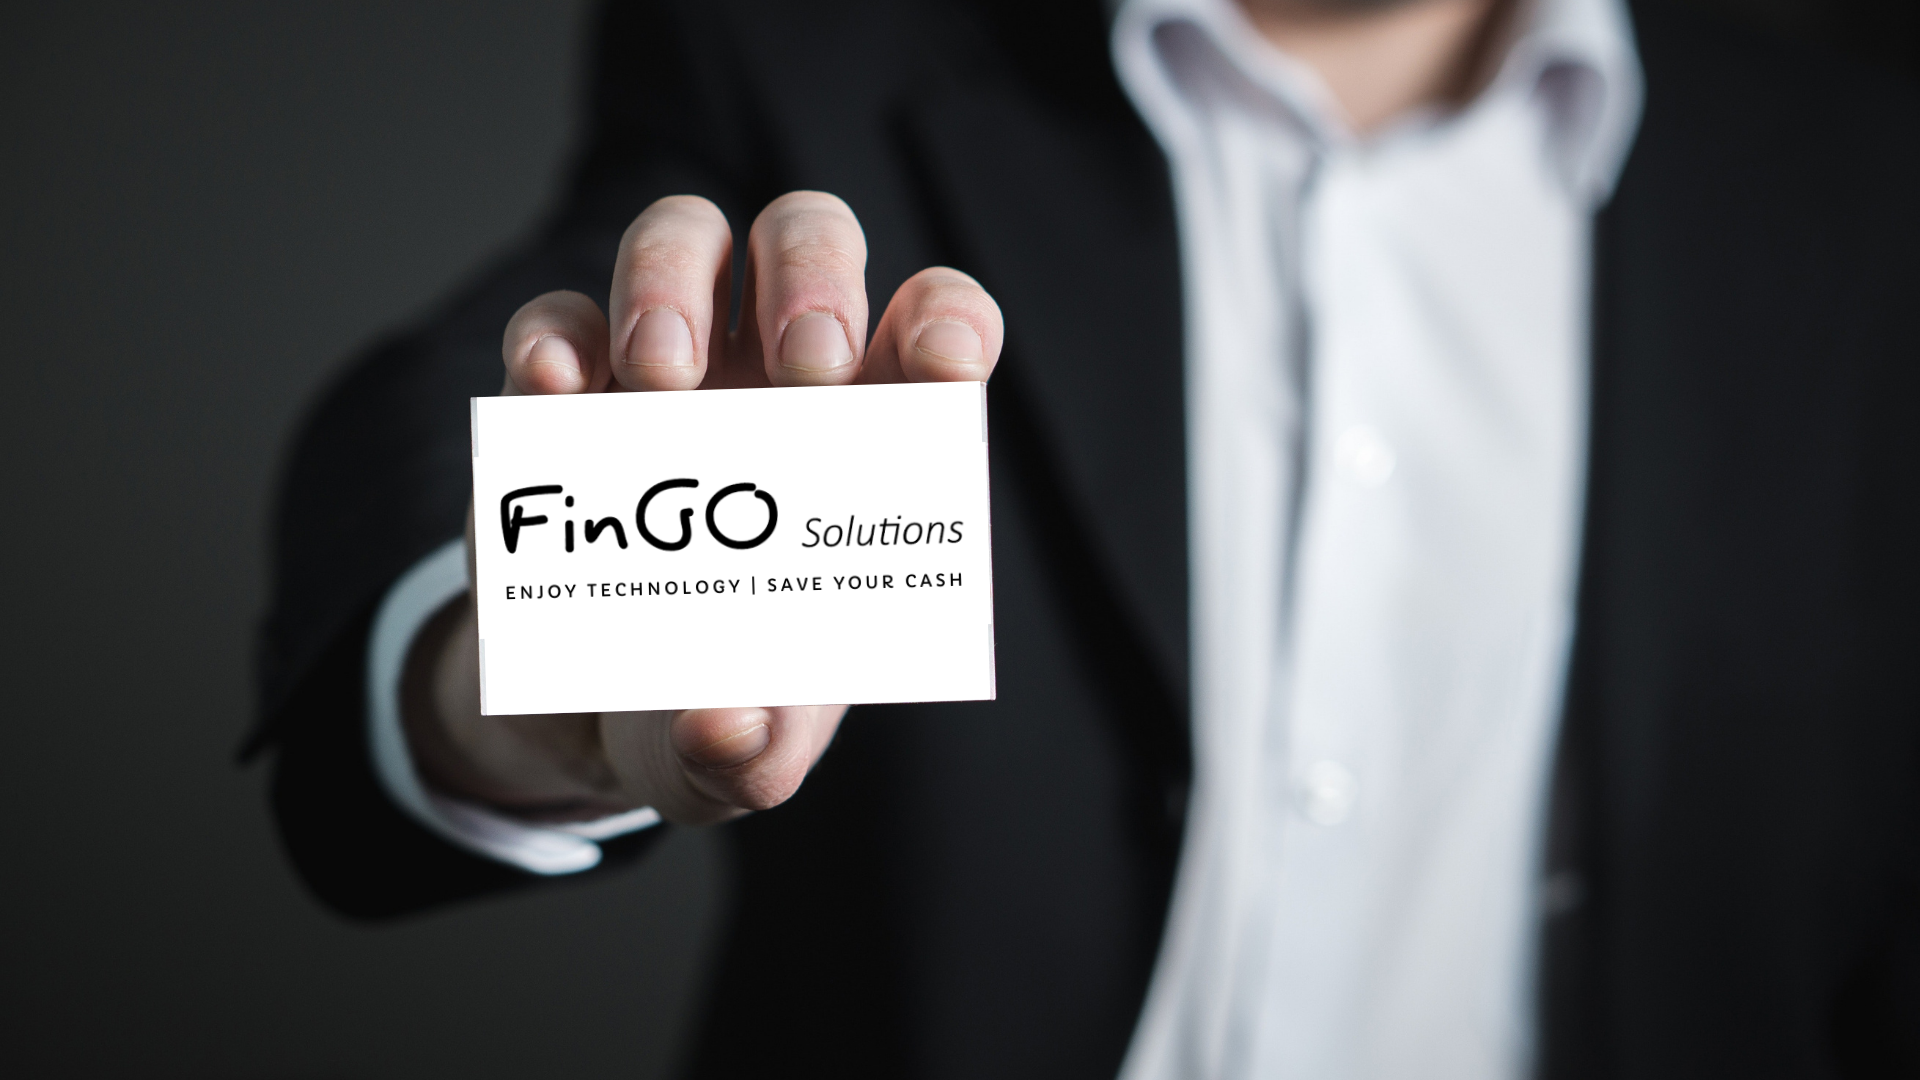 Contact Fingo solutions